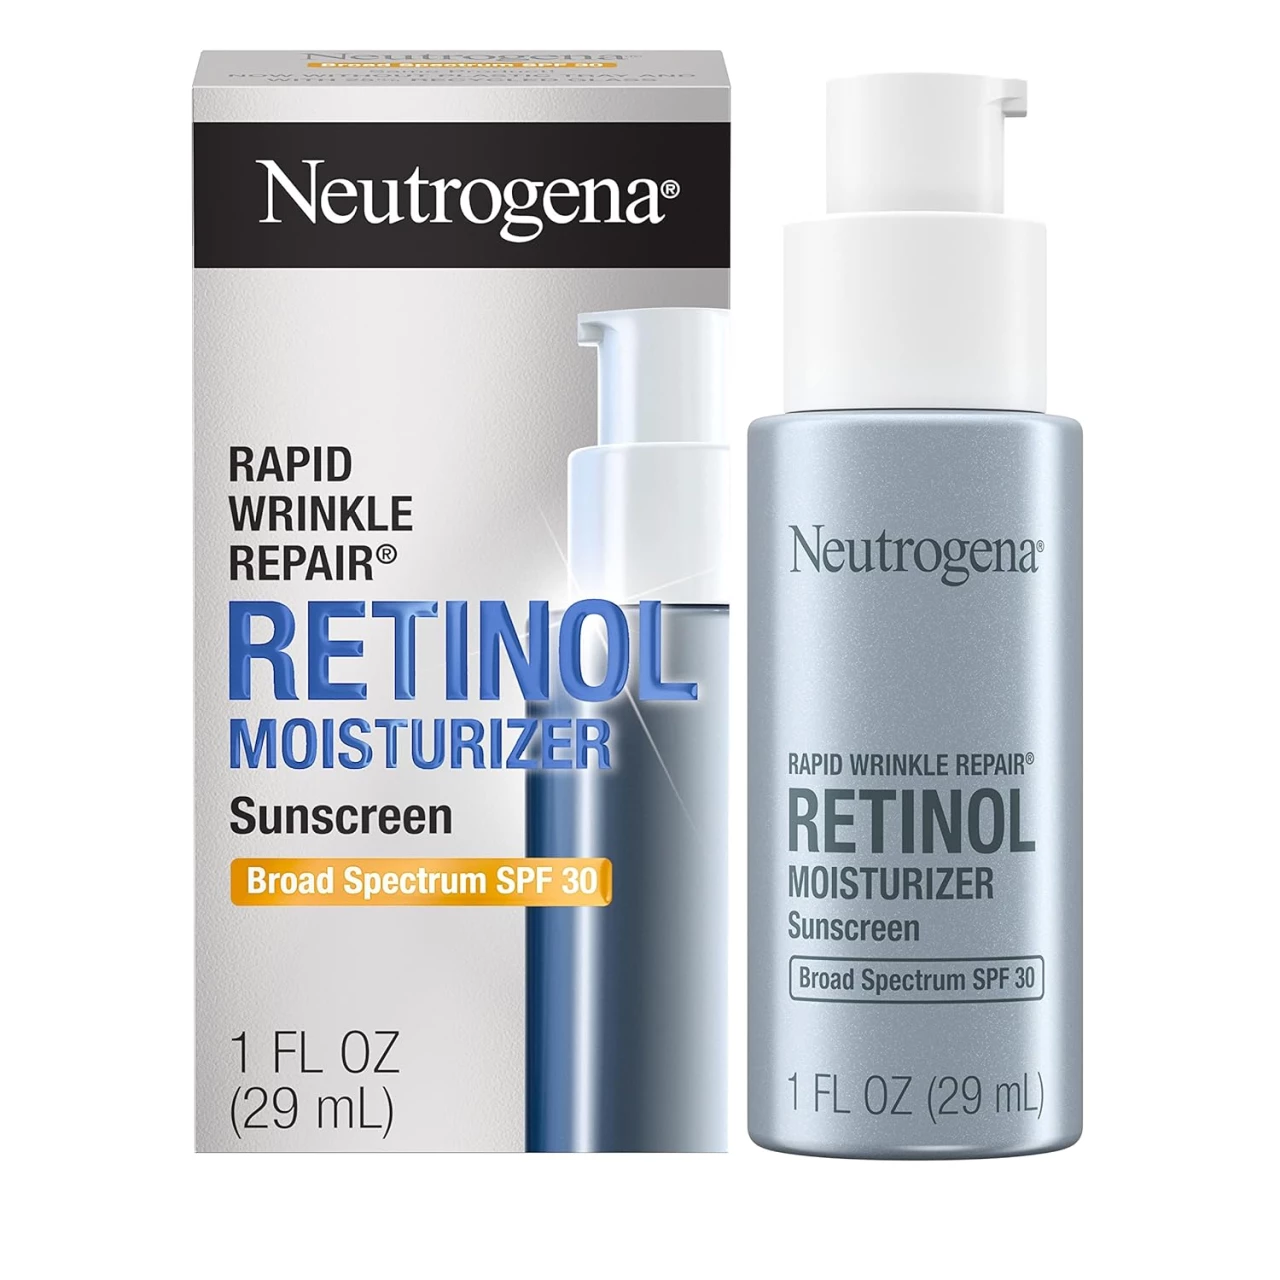 Neutrogena Rapid Wrinkle Repair Retinol Face Moisturizer with SPF 30 Sunscreen, Daily Anti-Aging Face Cream with Retinol &amp; Hyaluronic Acid